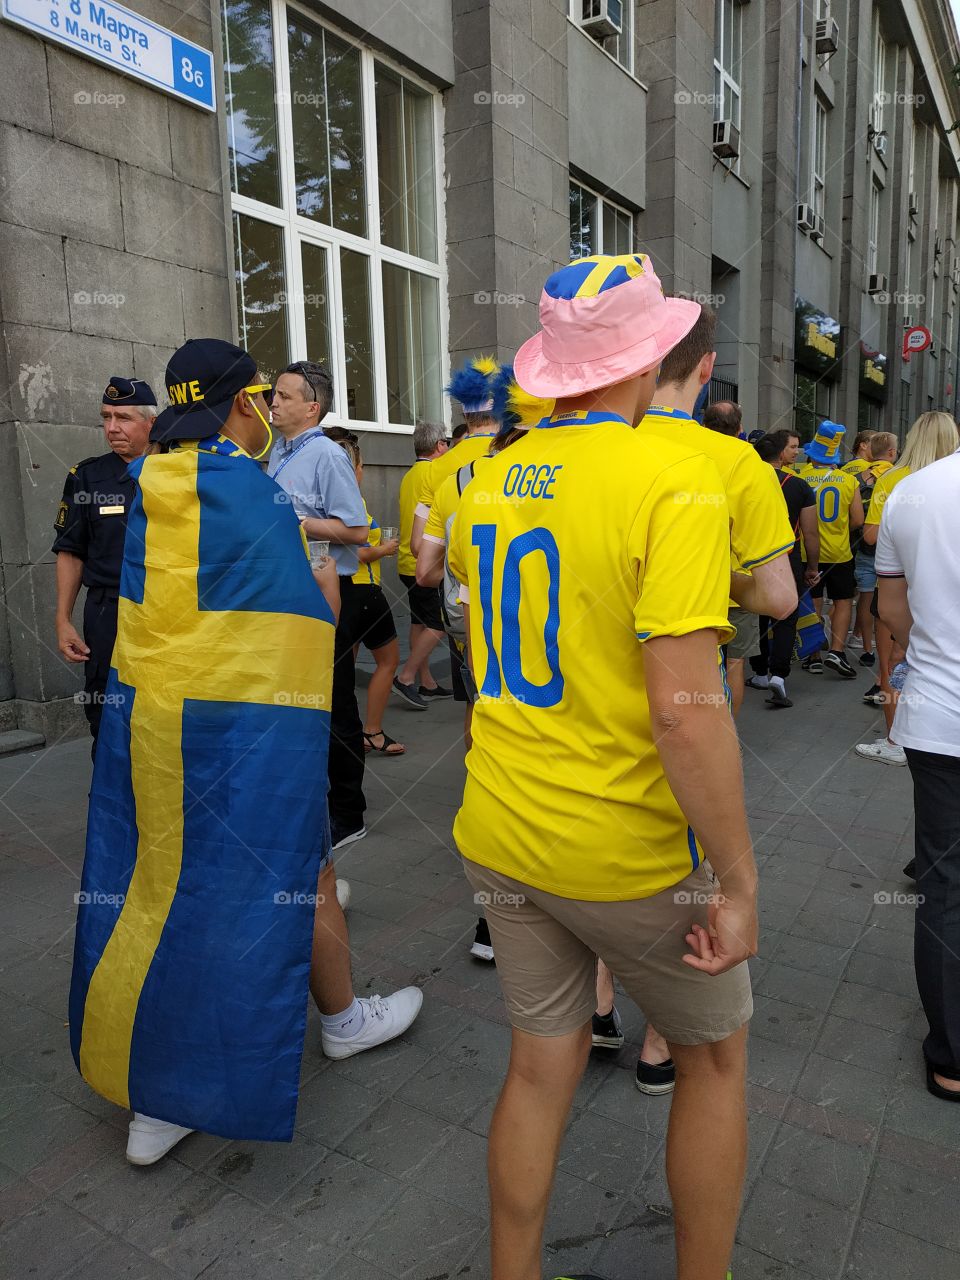 Swedish fans